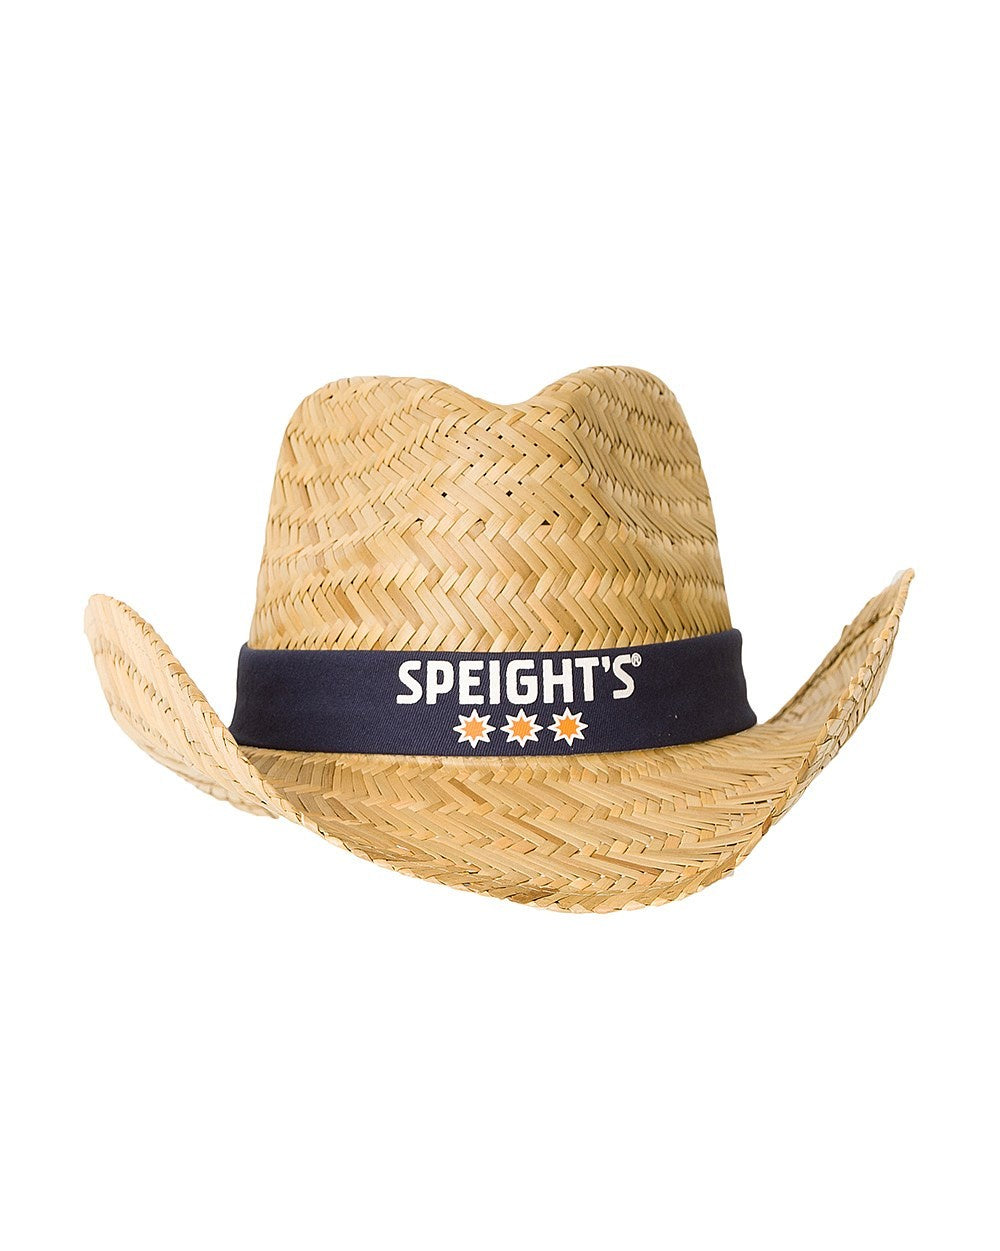 Speight's Cowboy hat